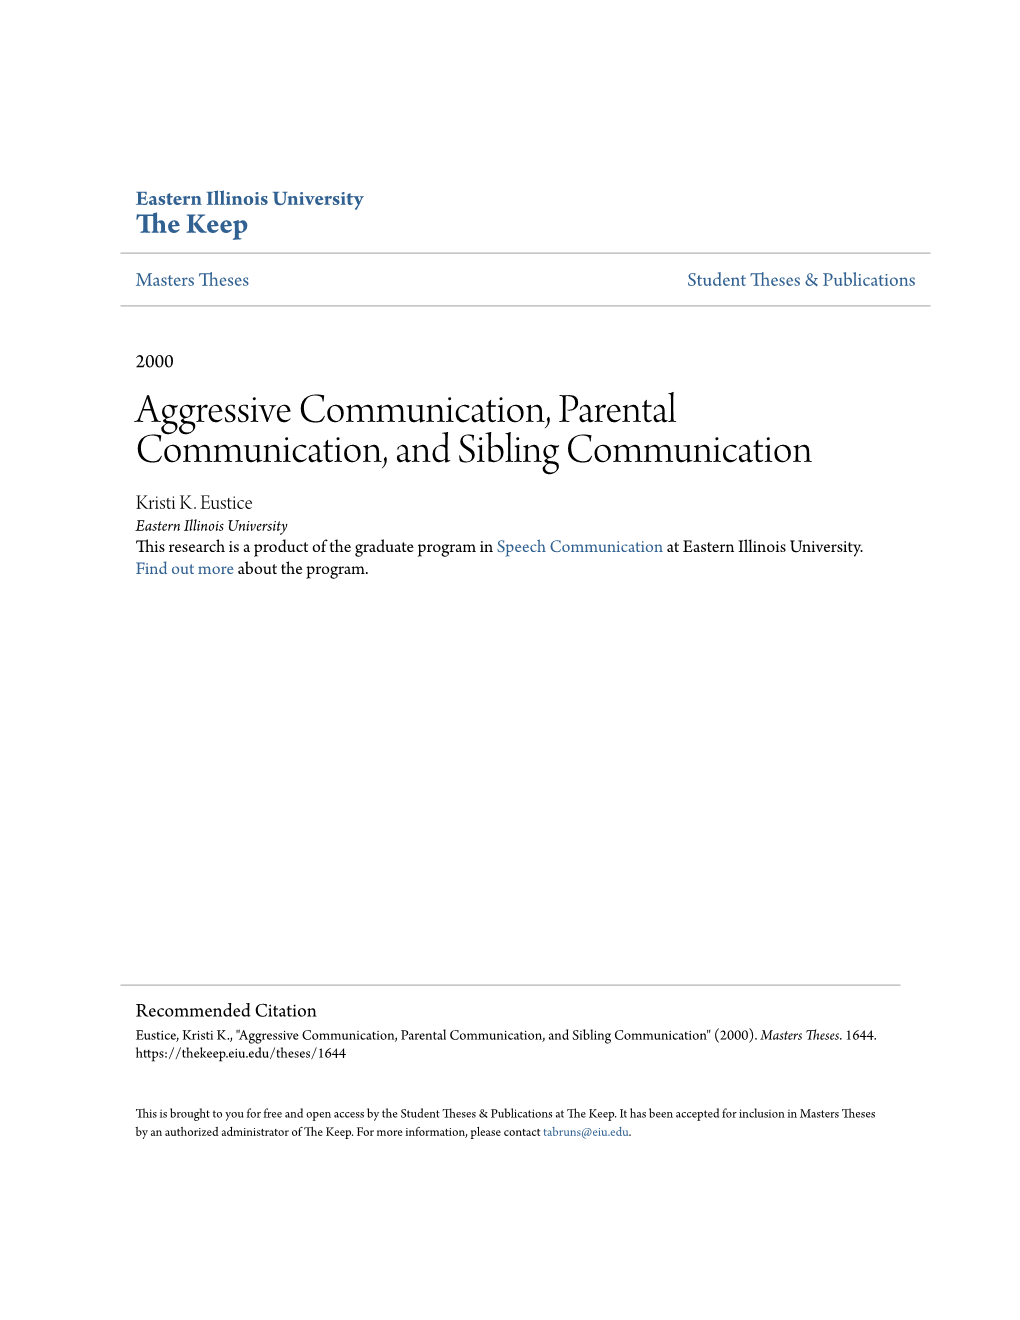 Aggressive Communication, Parental Communication, and Sibling Communication Kristi K